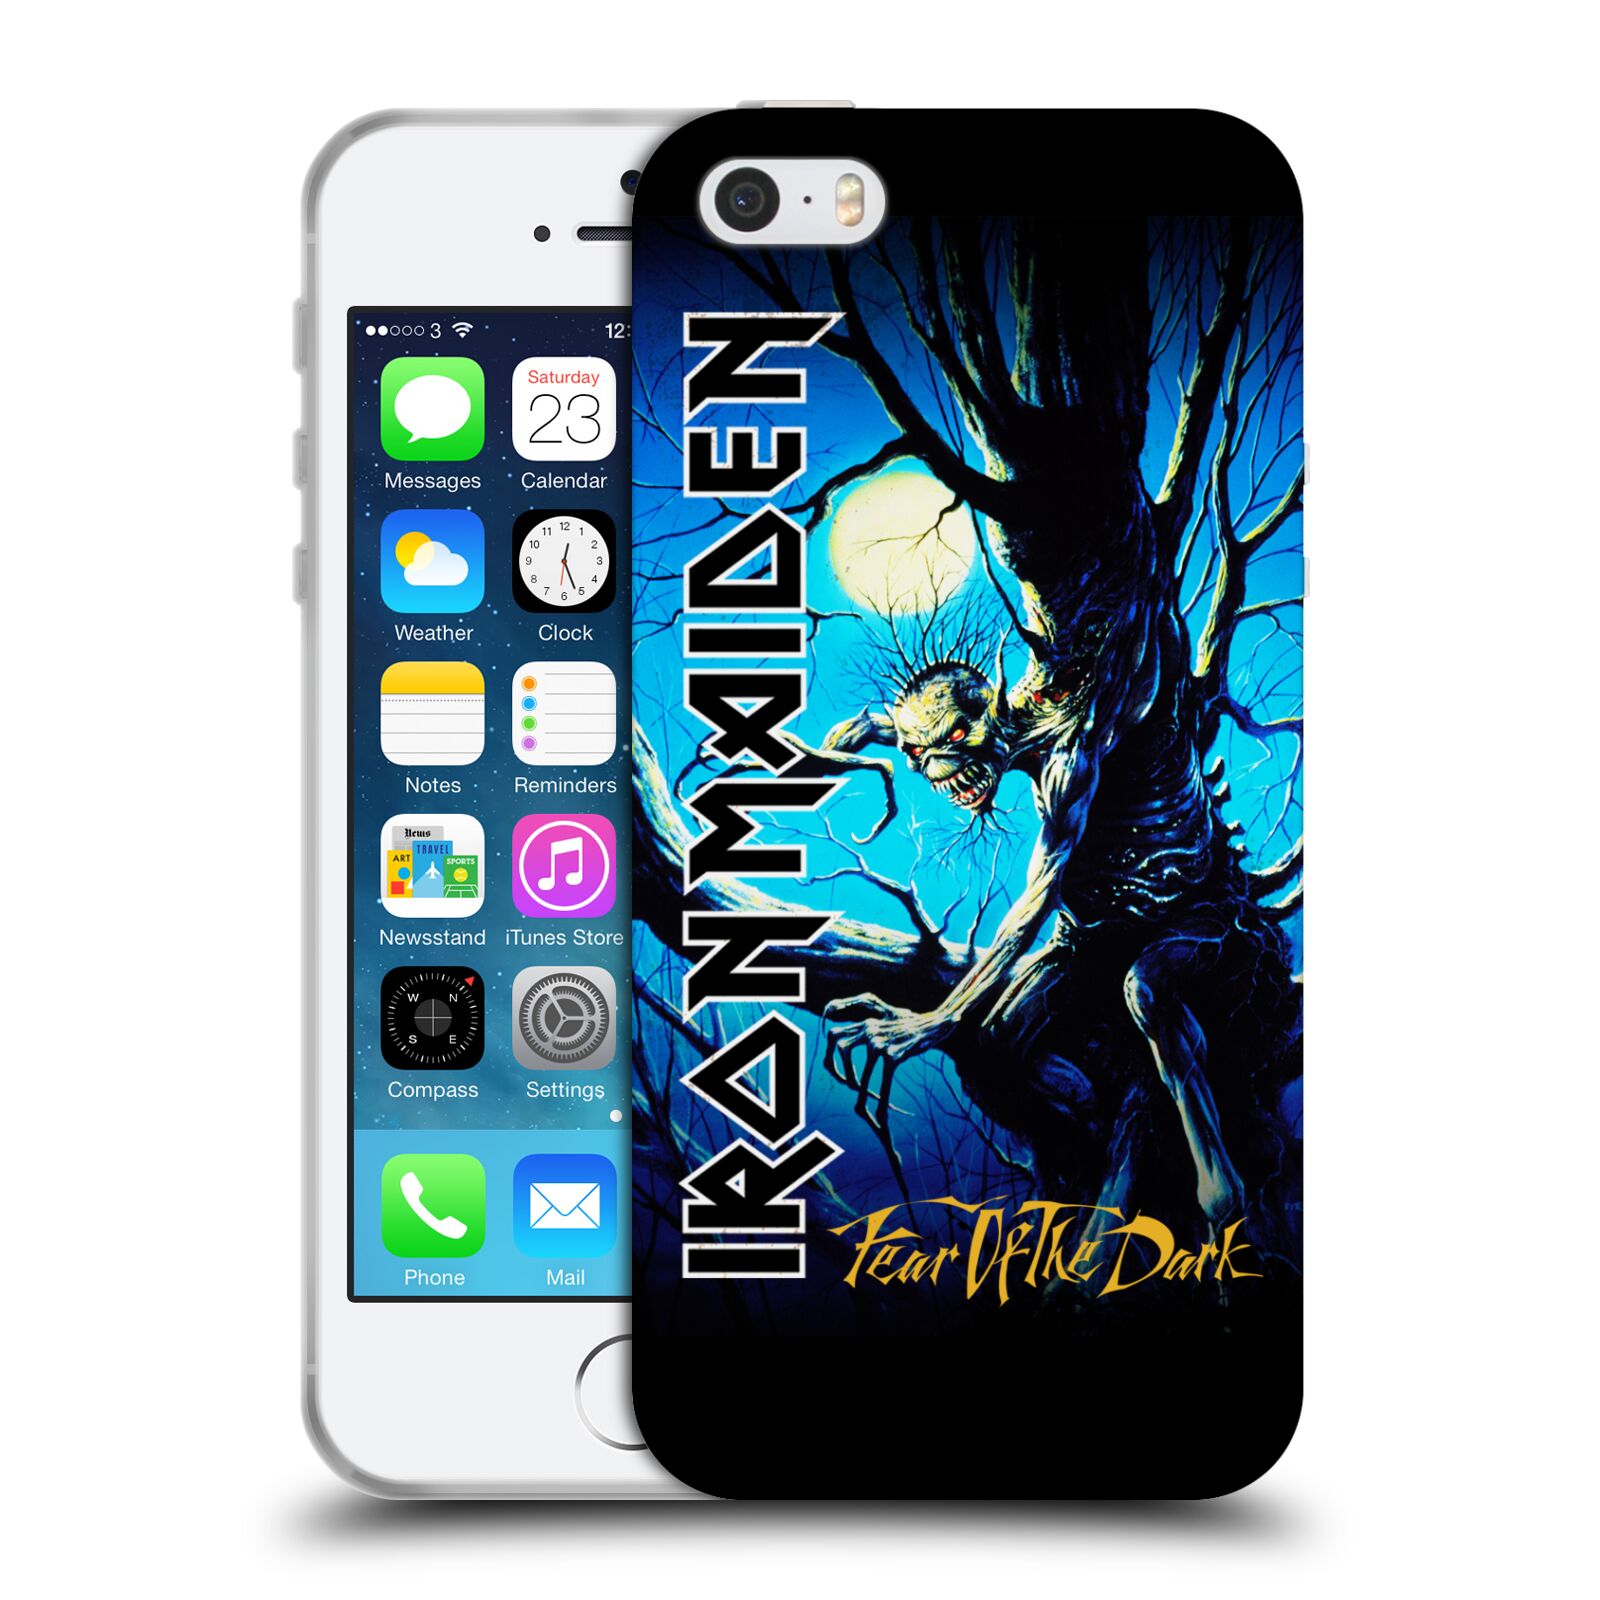 Silikonové pouzdro na mobil Apple iPhone 5, 5S, SE - Head Case - Iron Maiden - Fear Of The Dark (Silikonový kryt, obal, pouzdro na mobilní telefon Apple iPhone SE, 5S a 5 s motivem Iron Maiden - Fear Of The Dark)